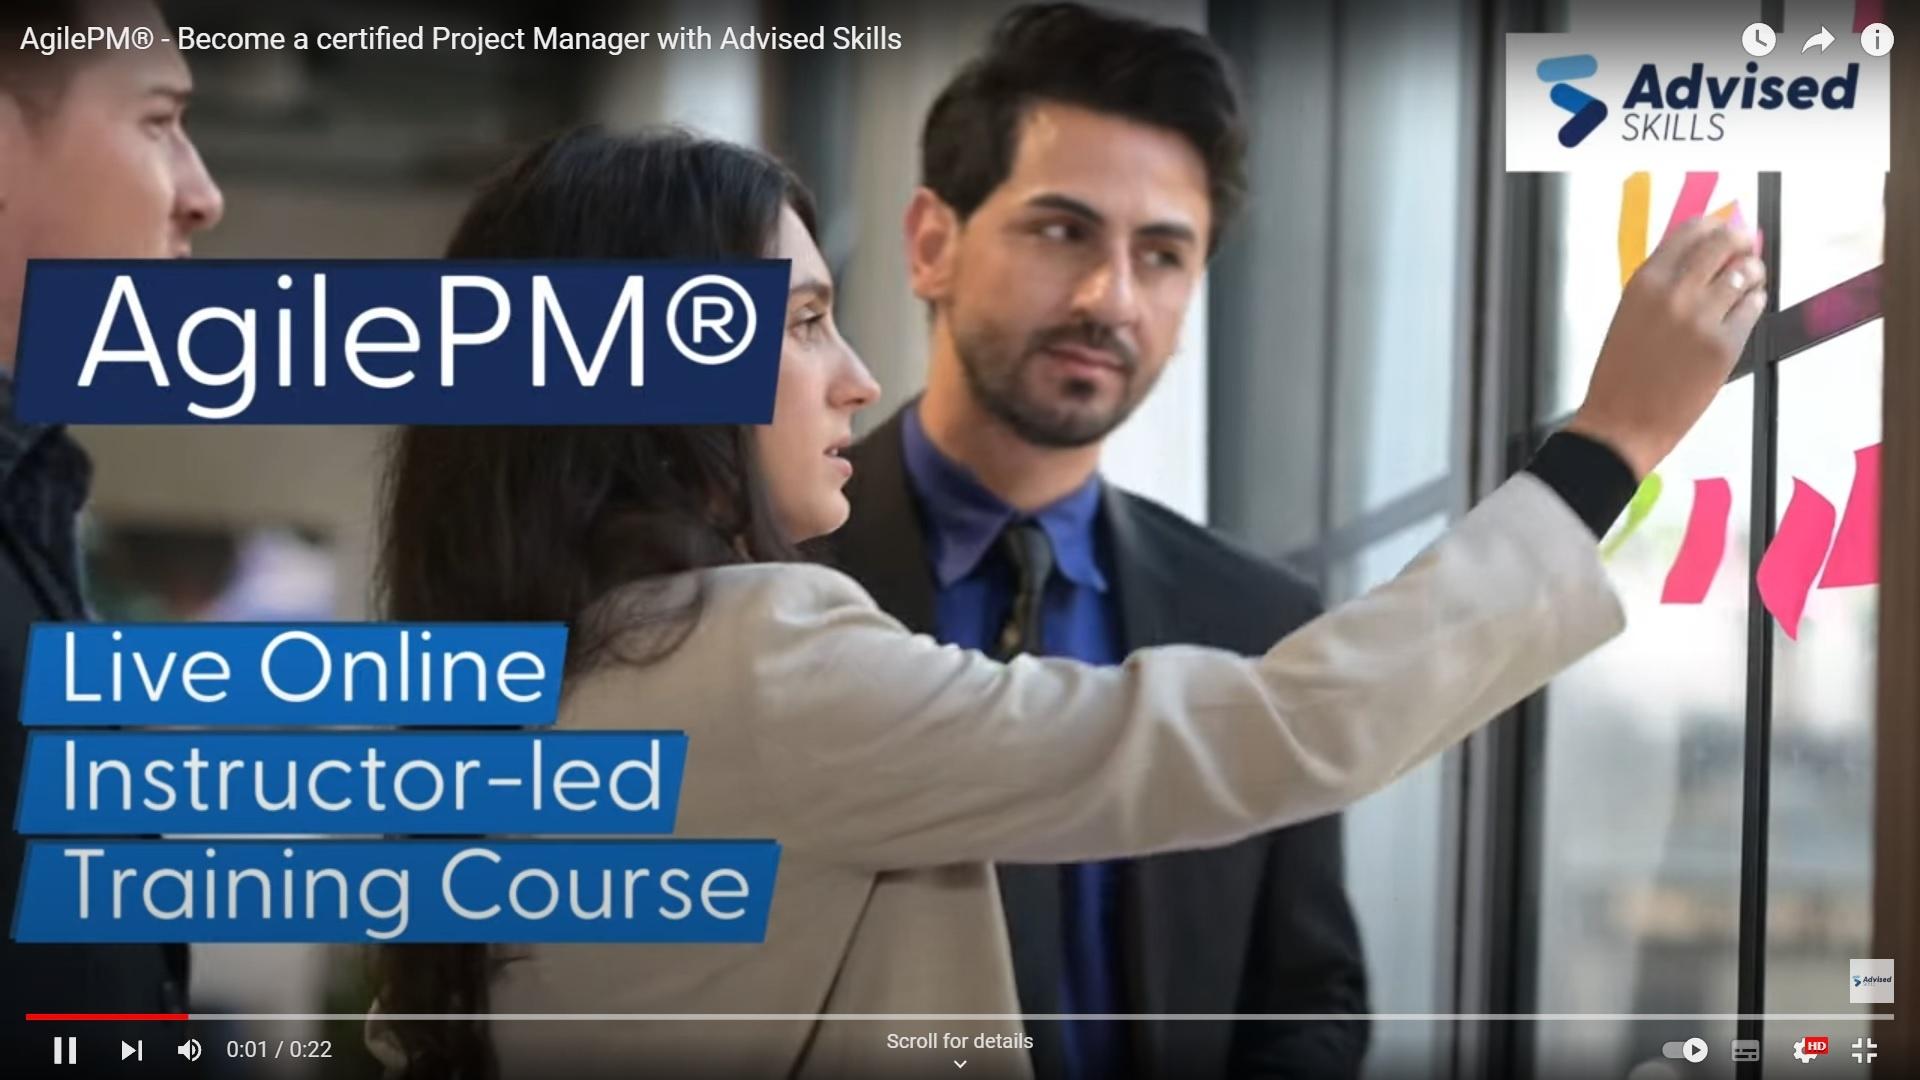 Agile Project Management (AgilePM) Training Course - Advised Skills